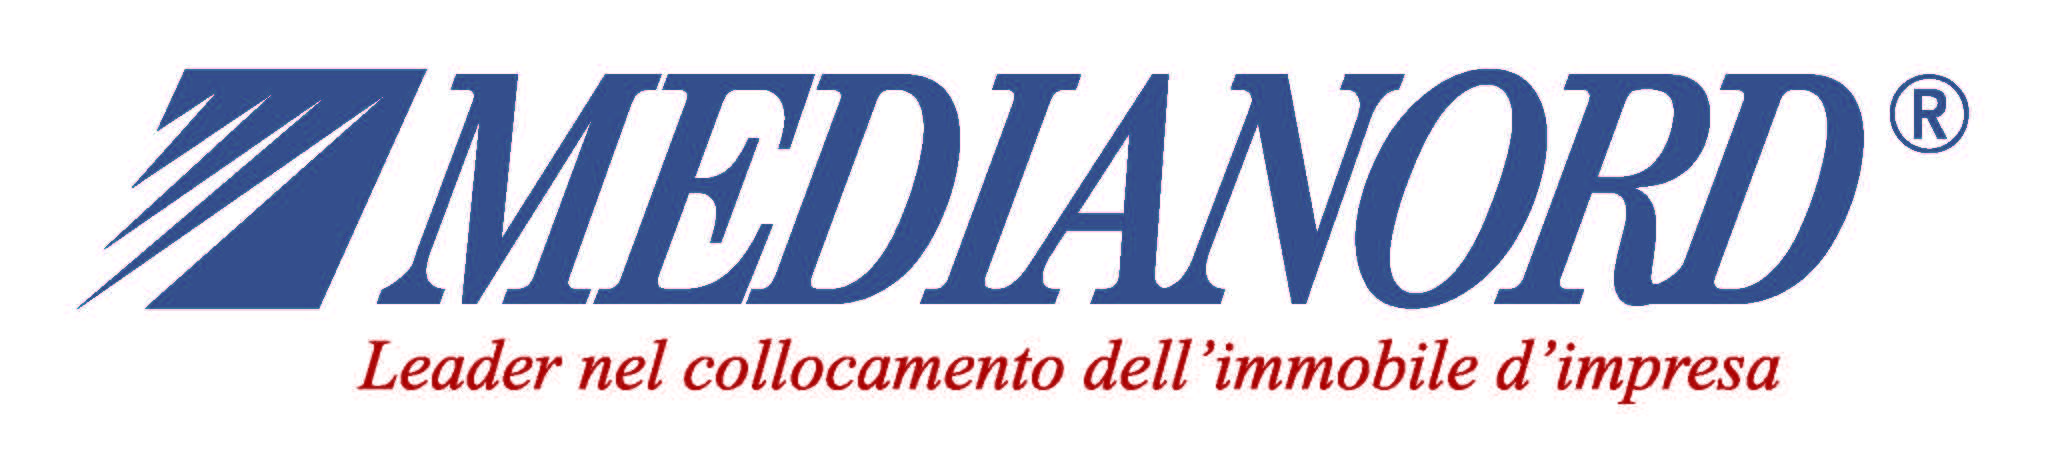 logo Medianord